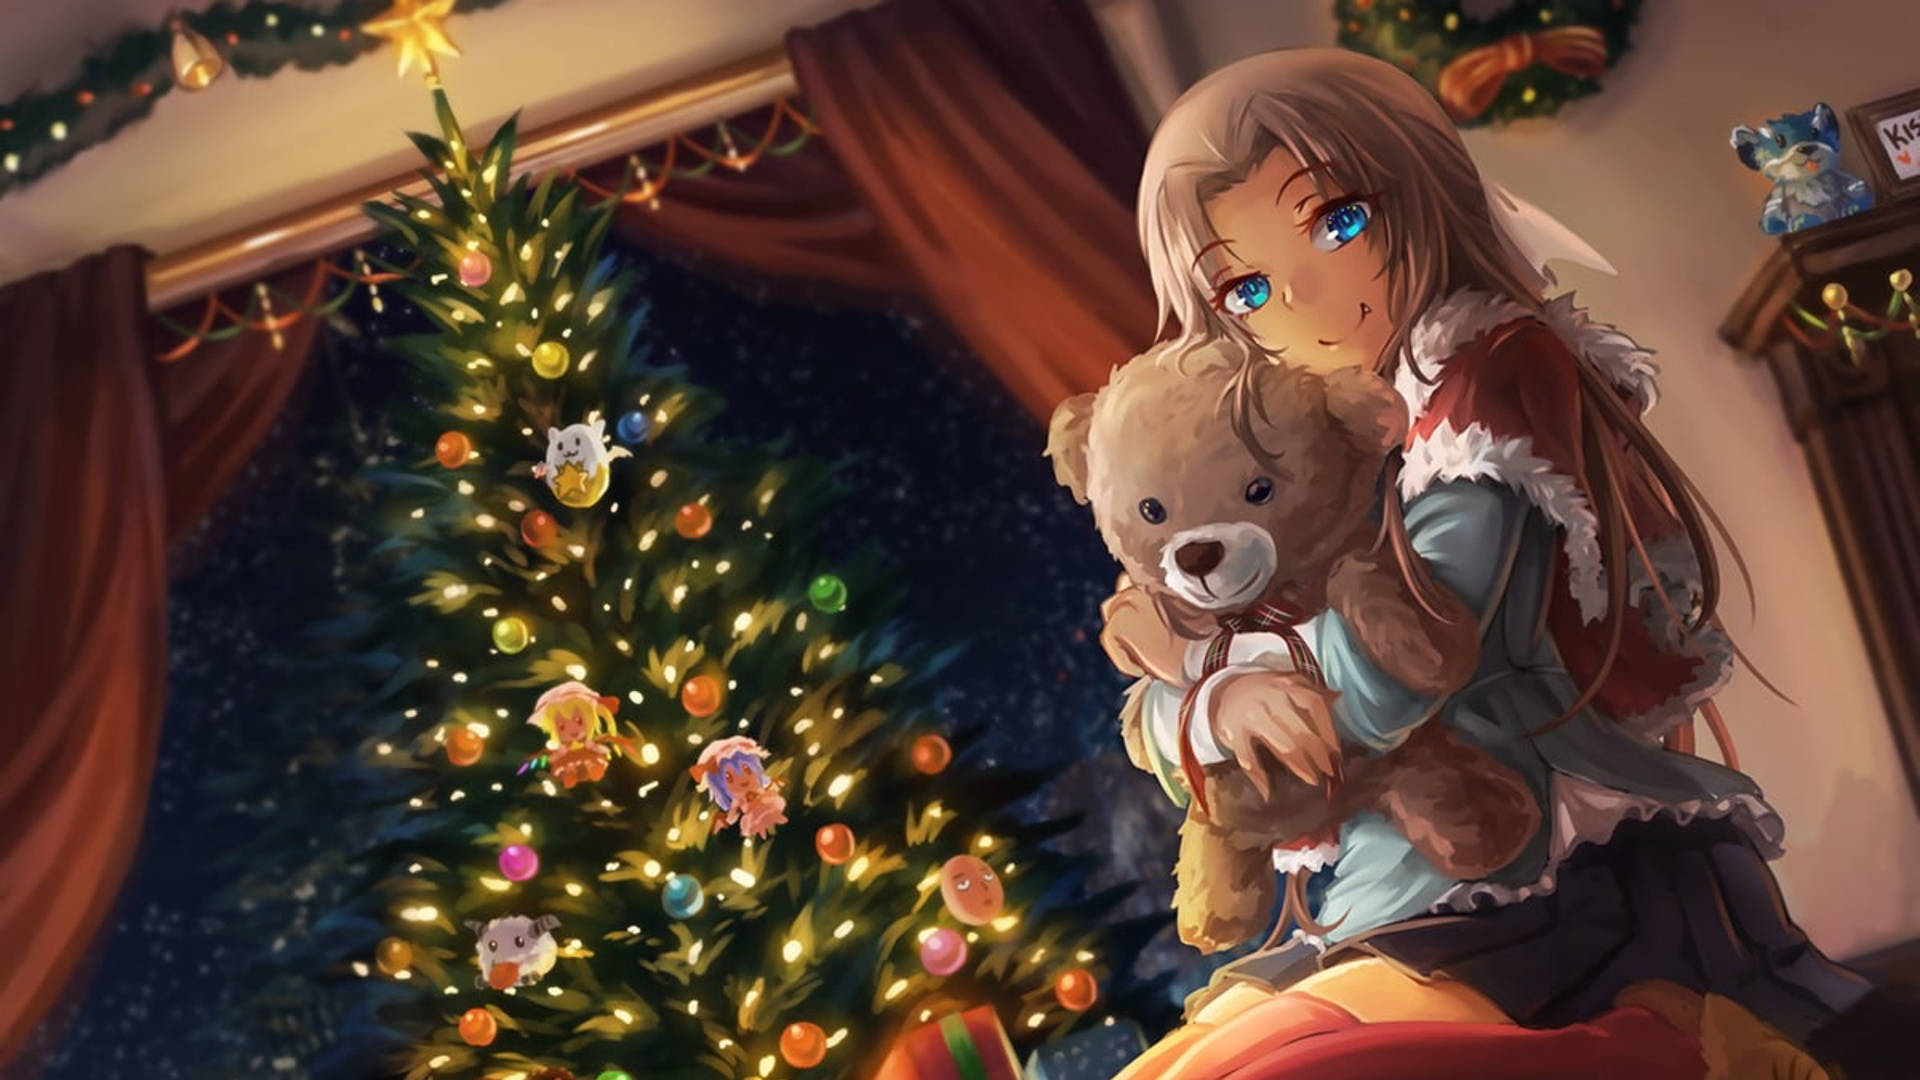 Anime Christmas Girl With Teddy Bear Wallpaper